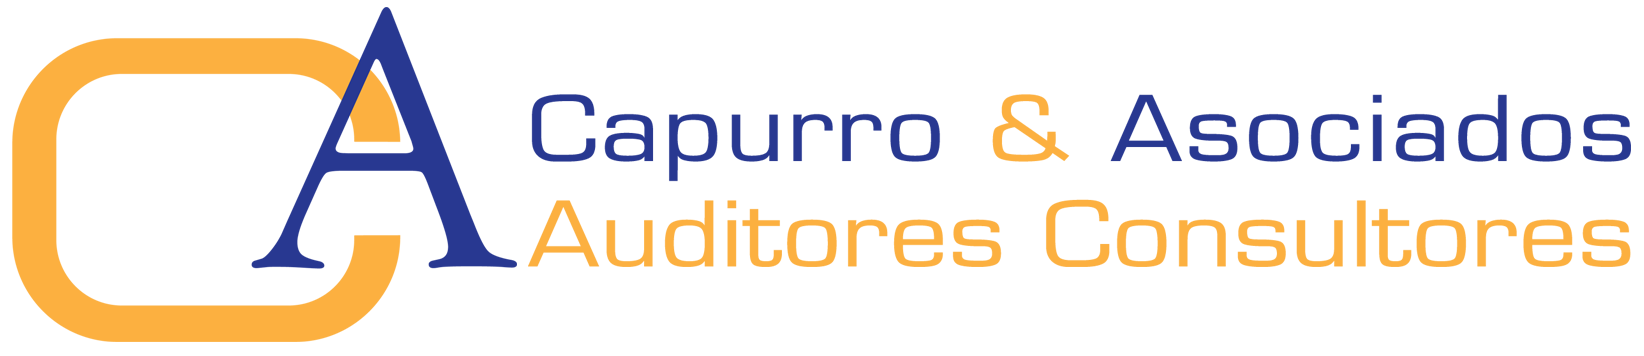 Capurro & Asociados - Consultores Auditores